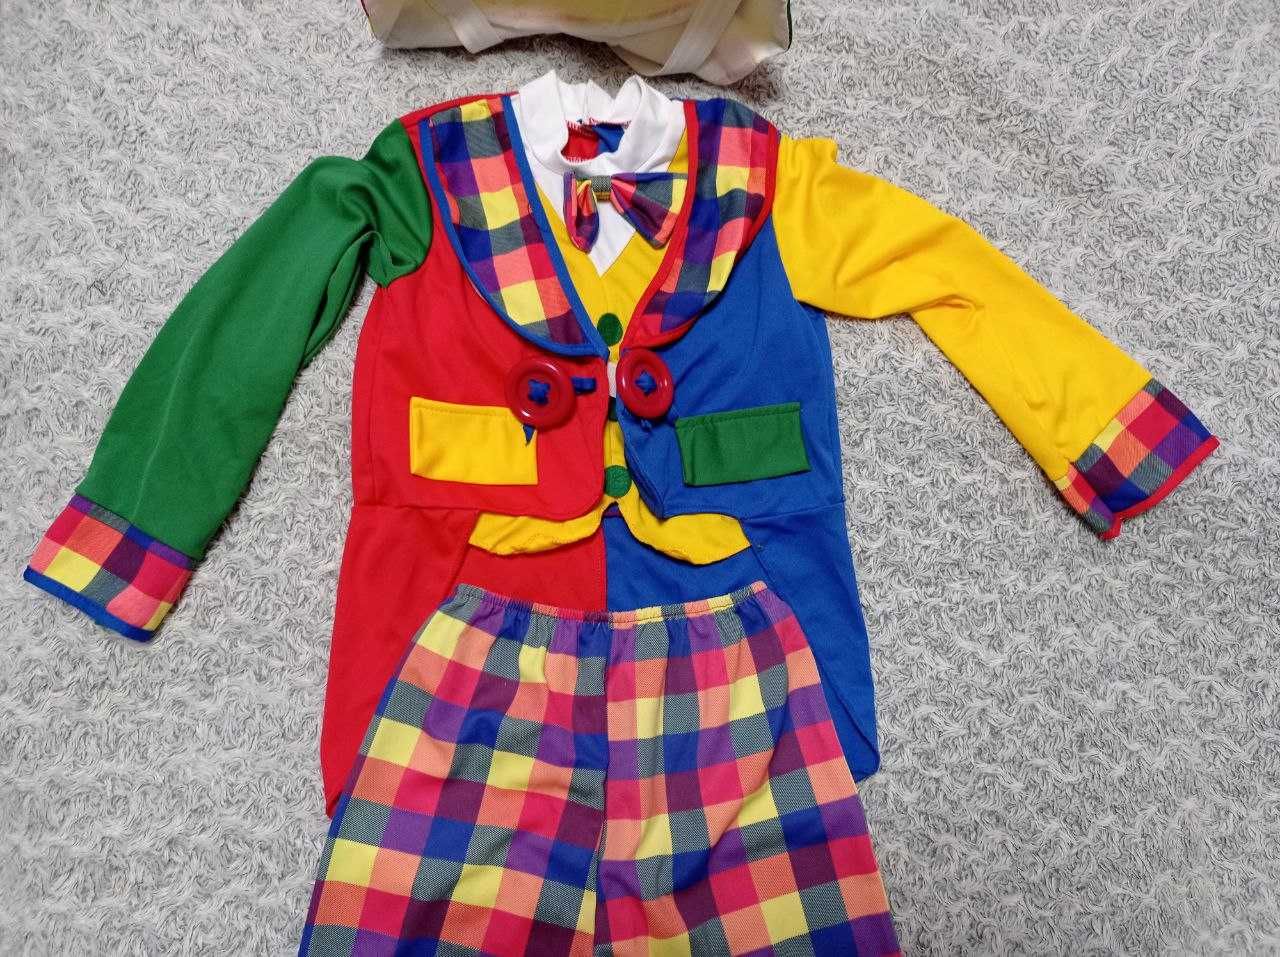 Карнавальный костюм клоун 6-7 лет